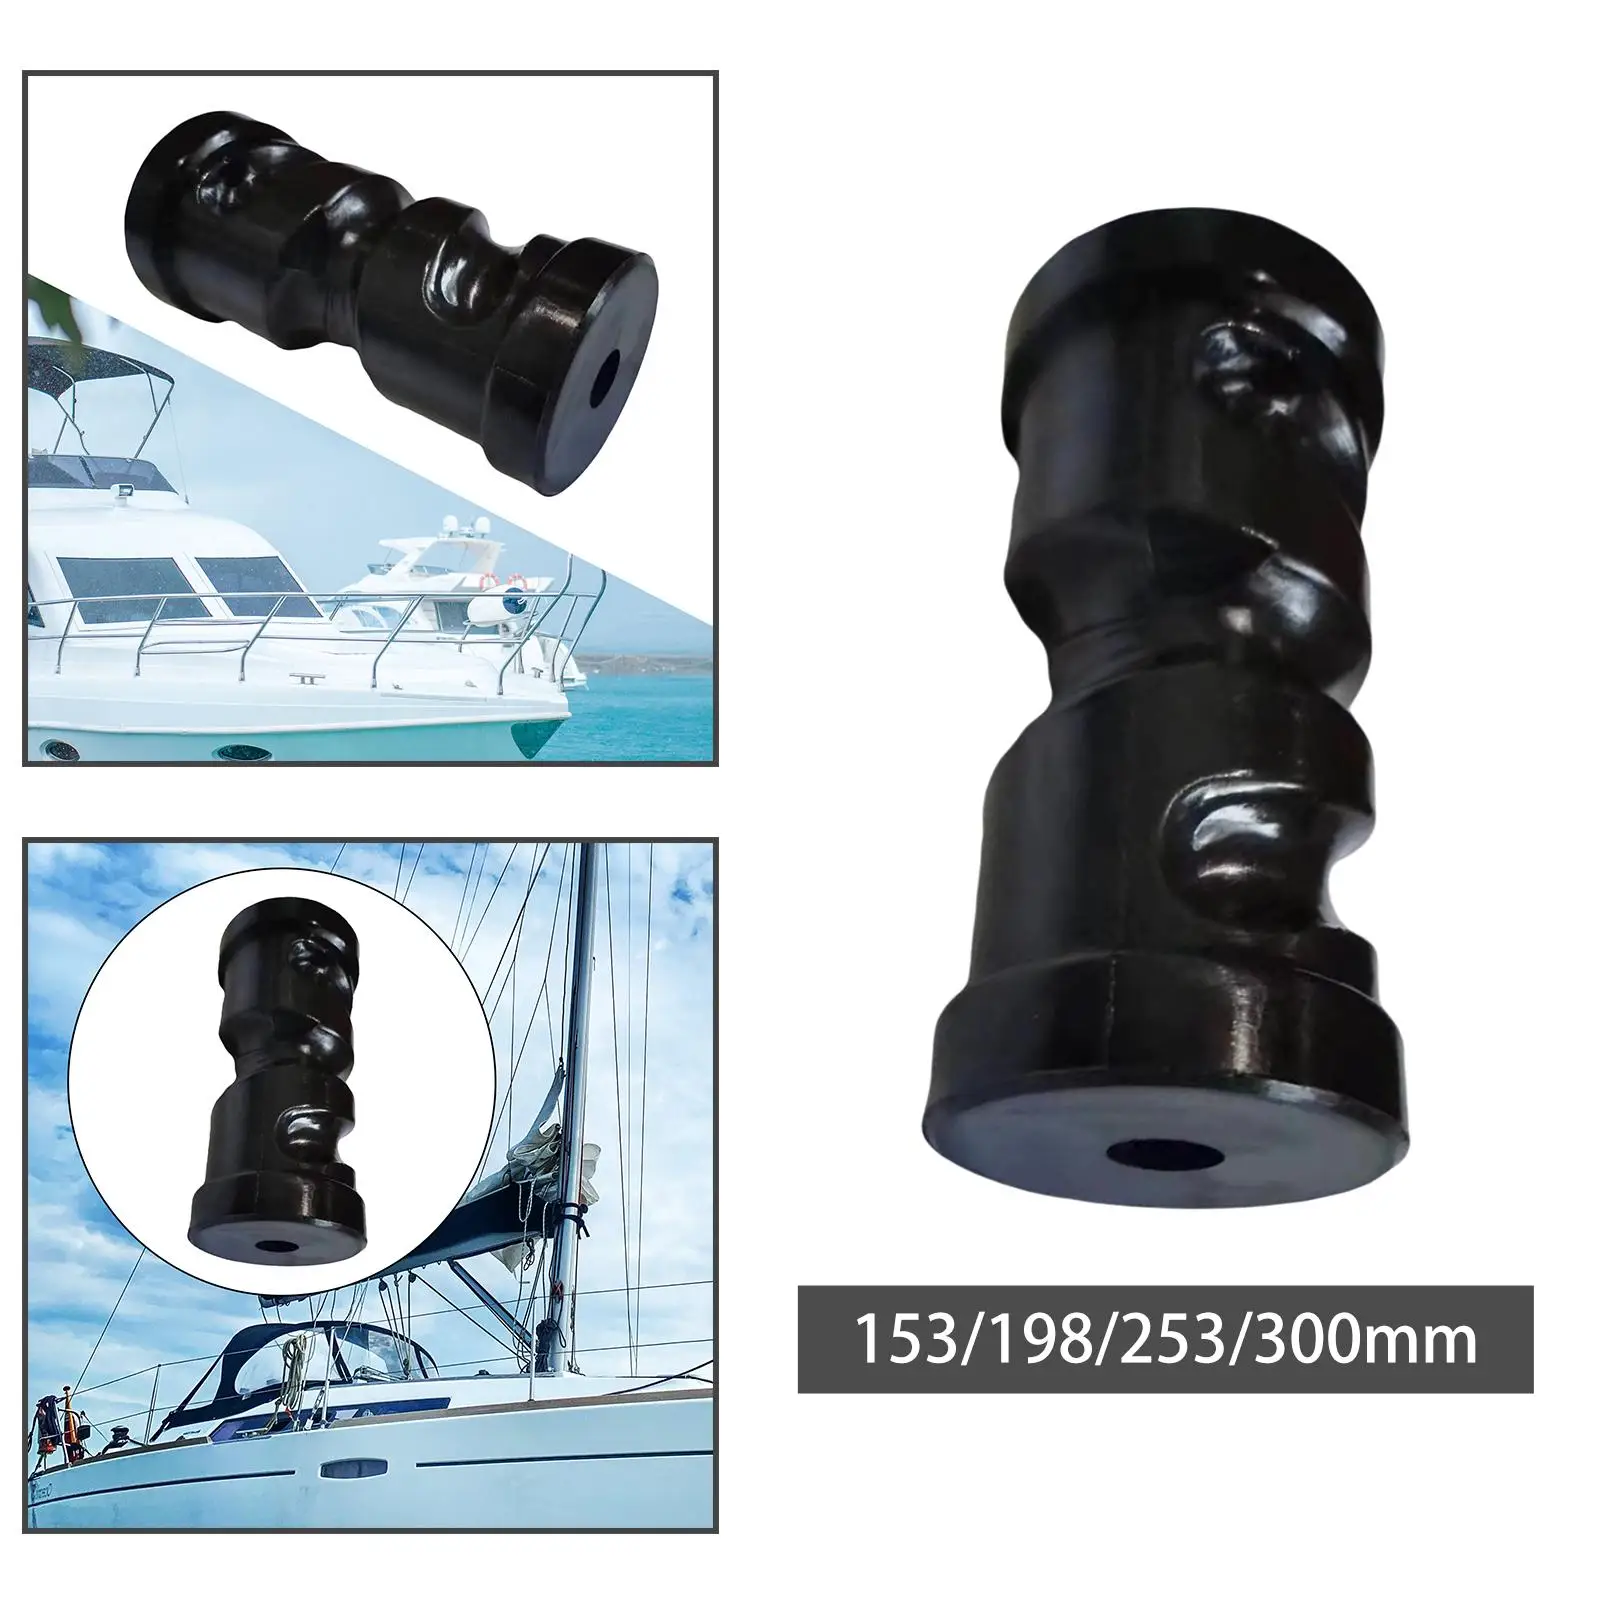 Marine Keel Roller Accessory Shaft Keel for Sturdy Wear Resistant Direct